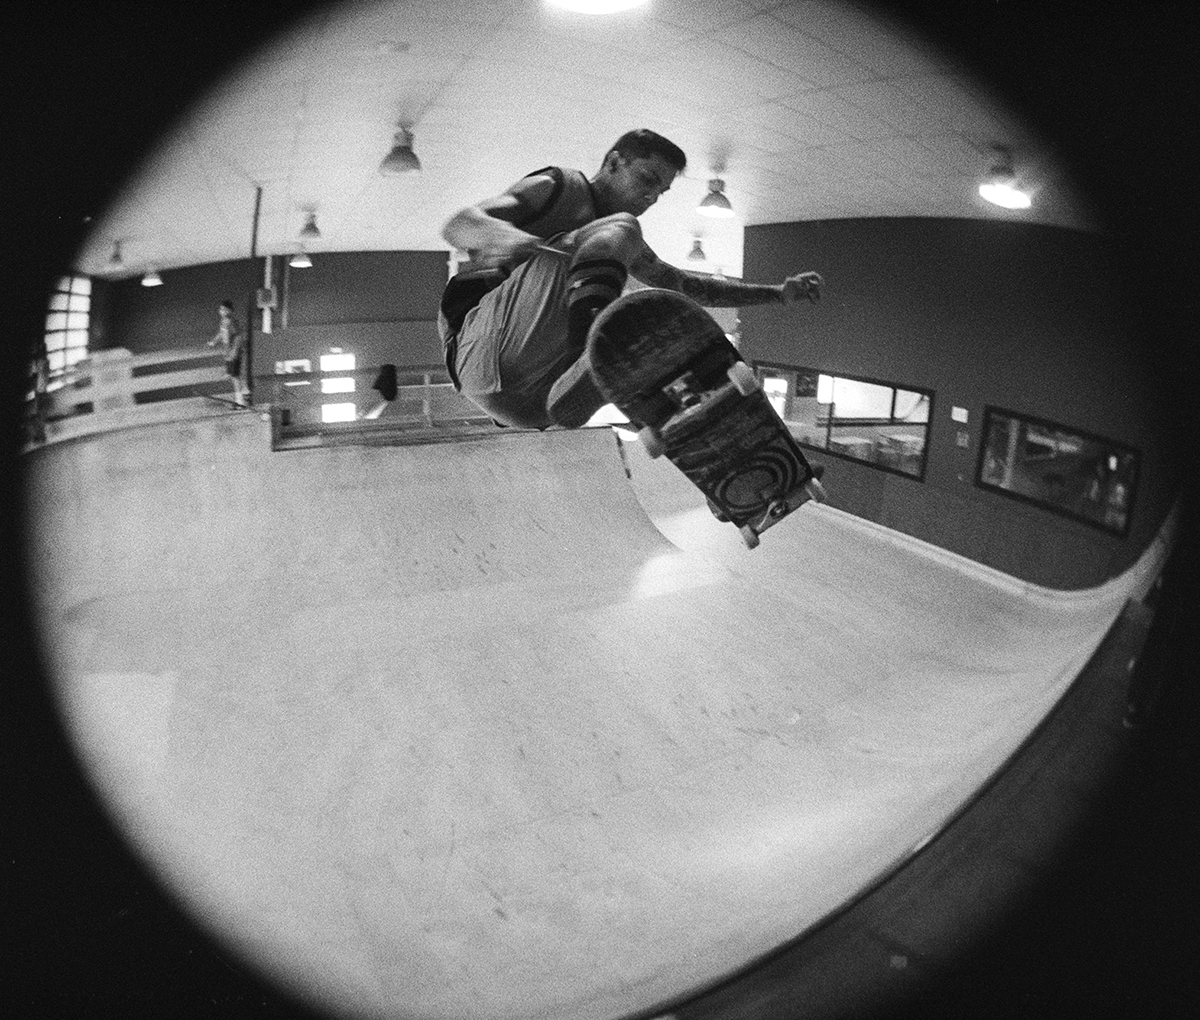 Fotografía Documental fotografia analogica 35 mm skateboarding monopatin